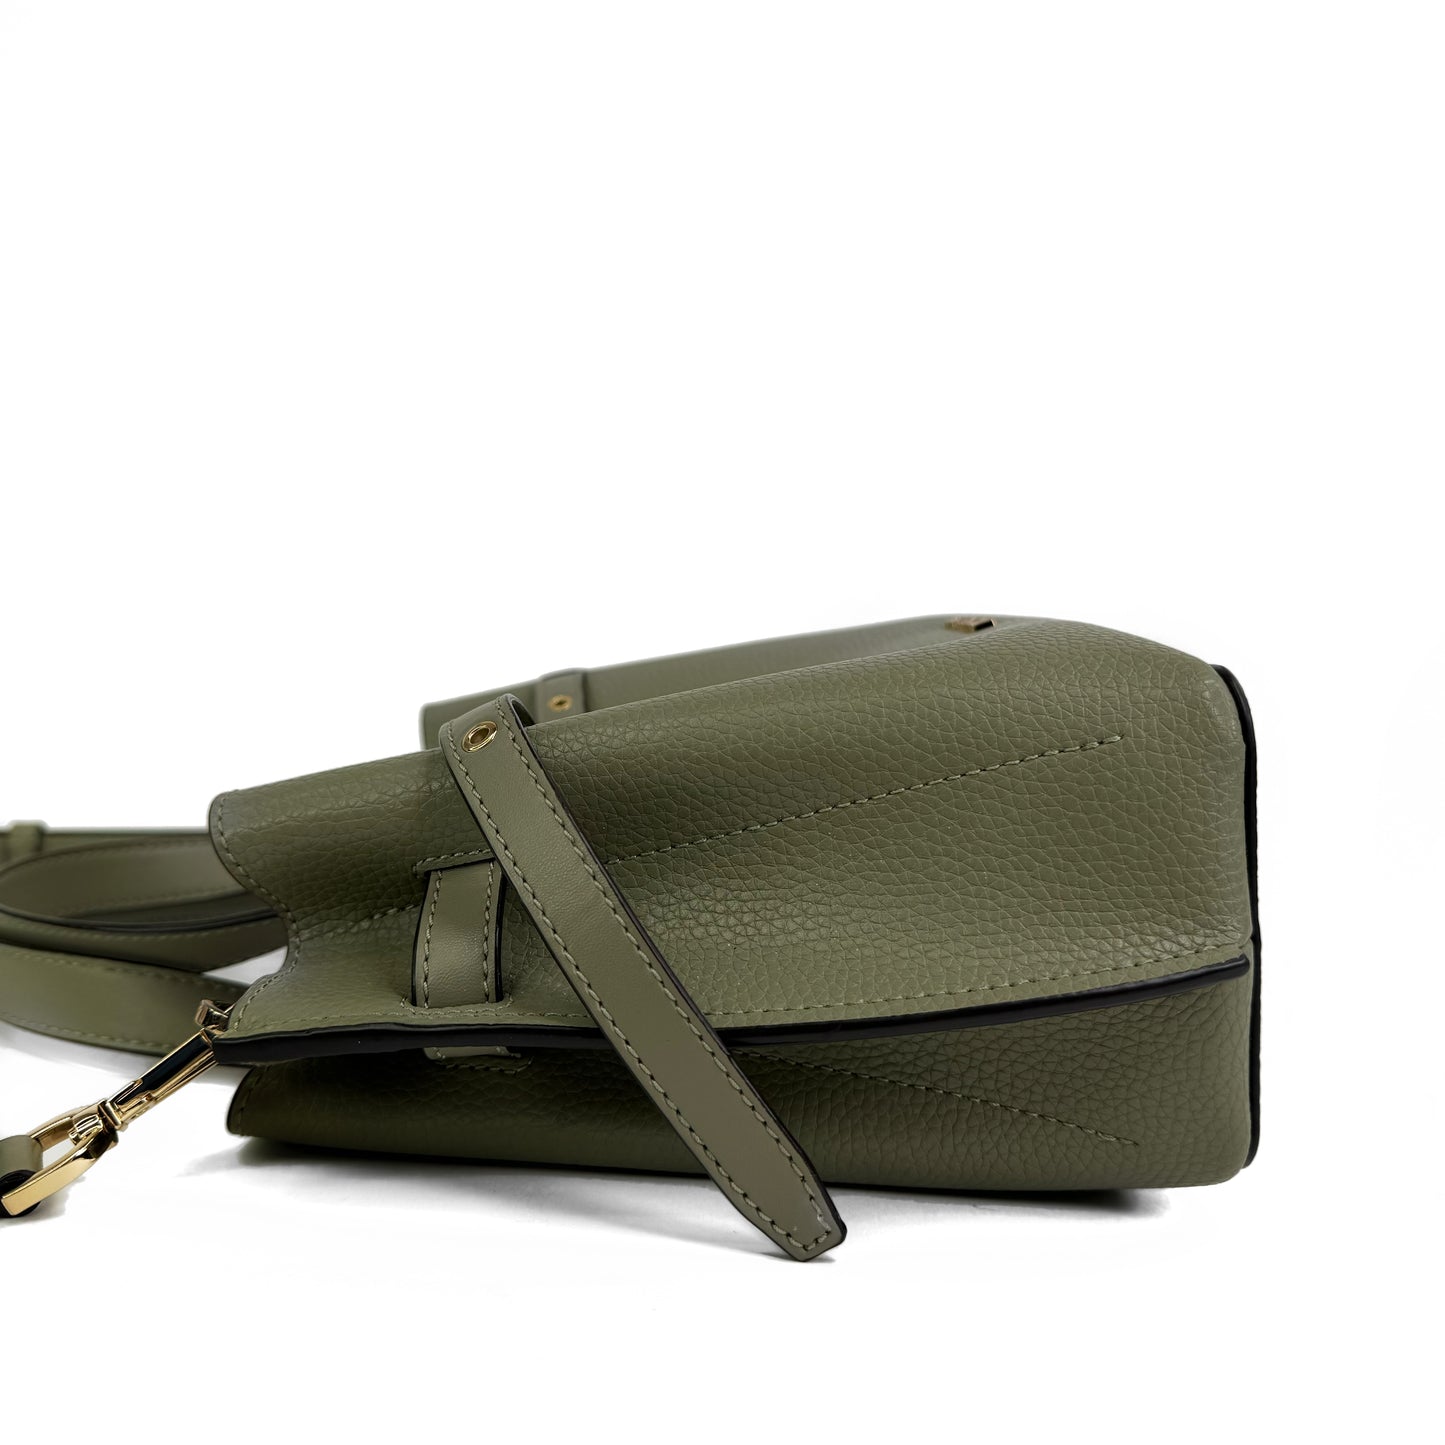 Michael Kors Convertible Small Green Bag